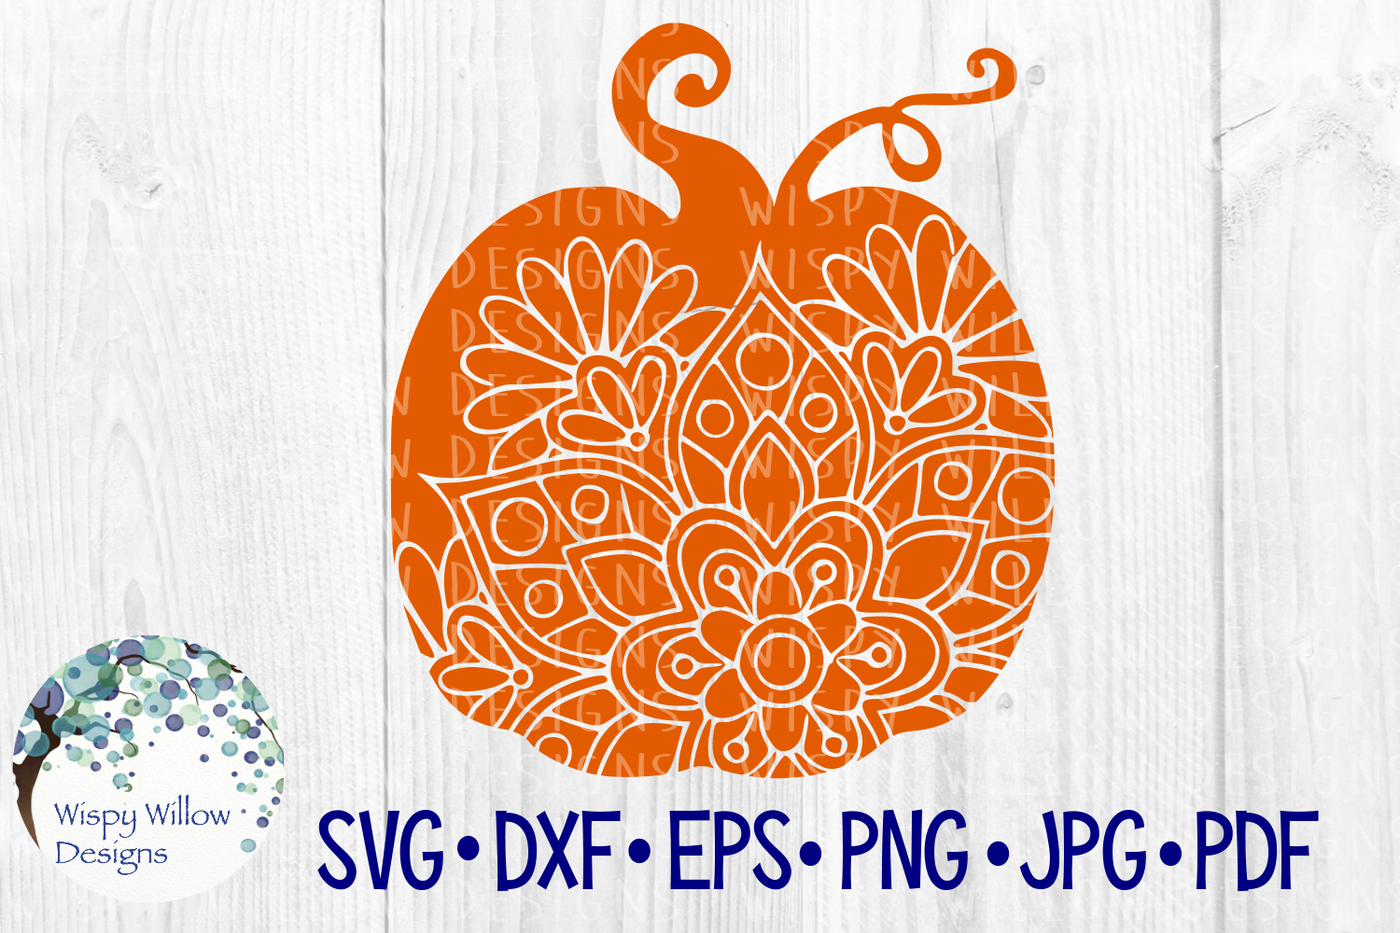 Pumpkin Mandala Fall Zentangle Svg Dxf Eps Png Jpg Pdf By Wispy Willow Designs Thehungryjpeg Com